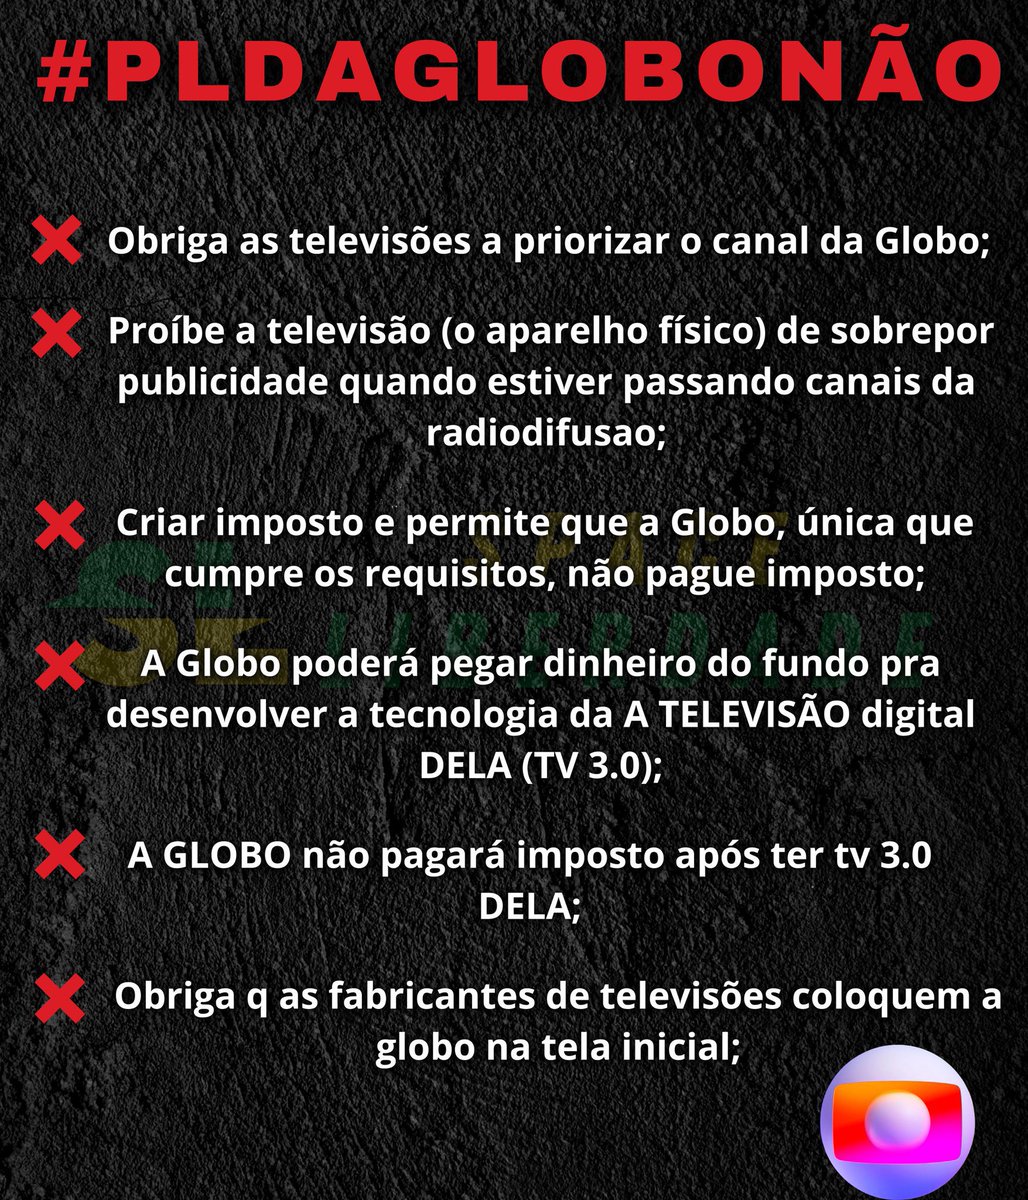 #PLdaGlobo
#GloboEmissoraDoDemonio 
#GloboLixoCorruPTa